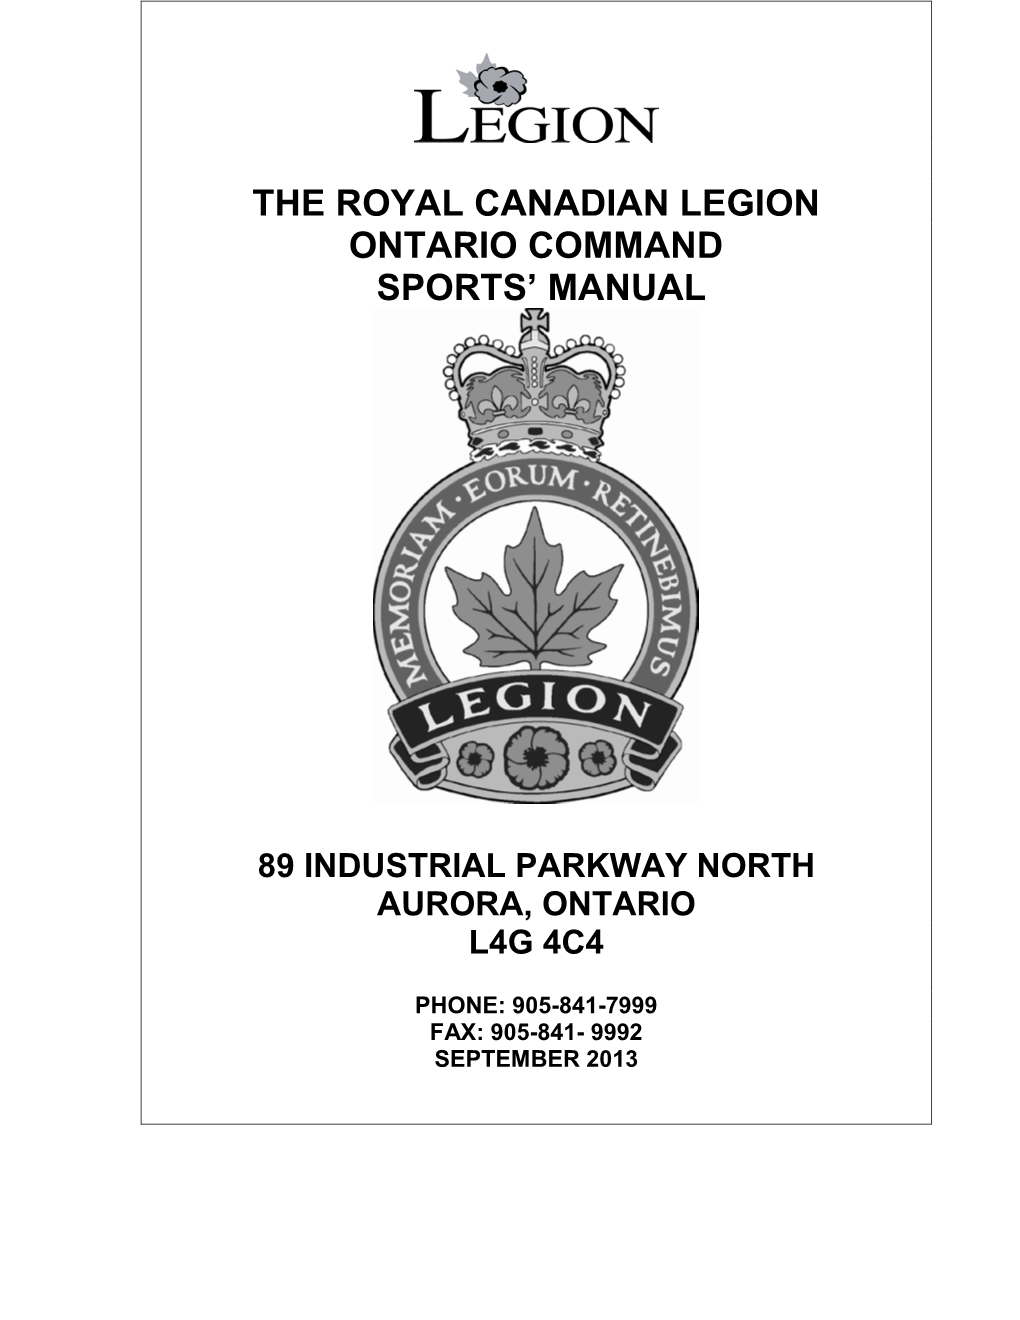 The Royal Canadian Legion Ontario Command Sports' Manual